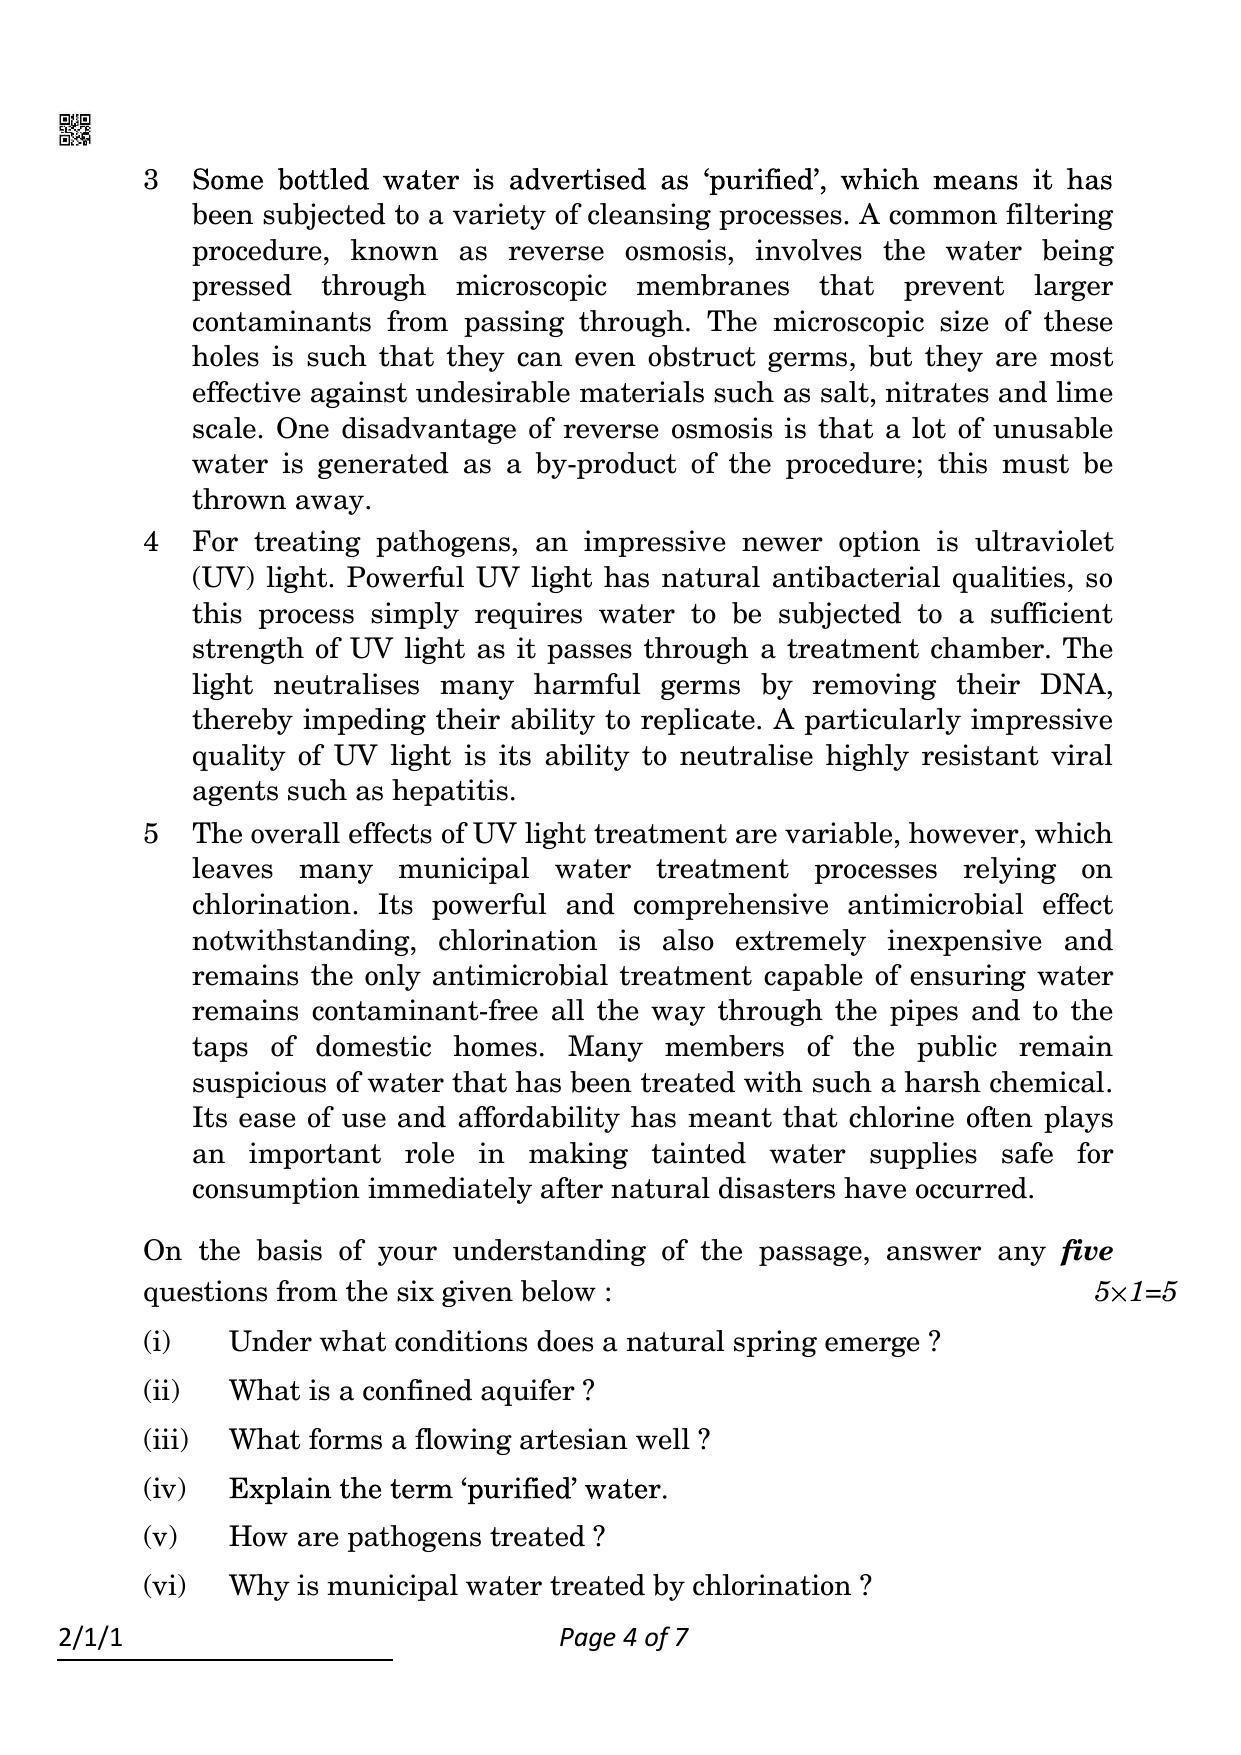 CBSE Class 10 2-1-1 English L & L 2022 Question Paper - Page 4